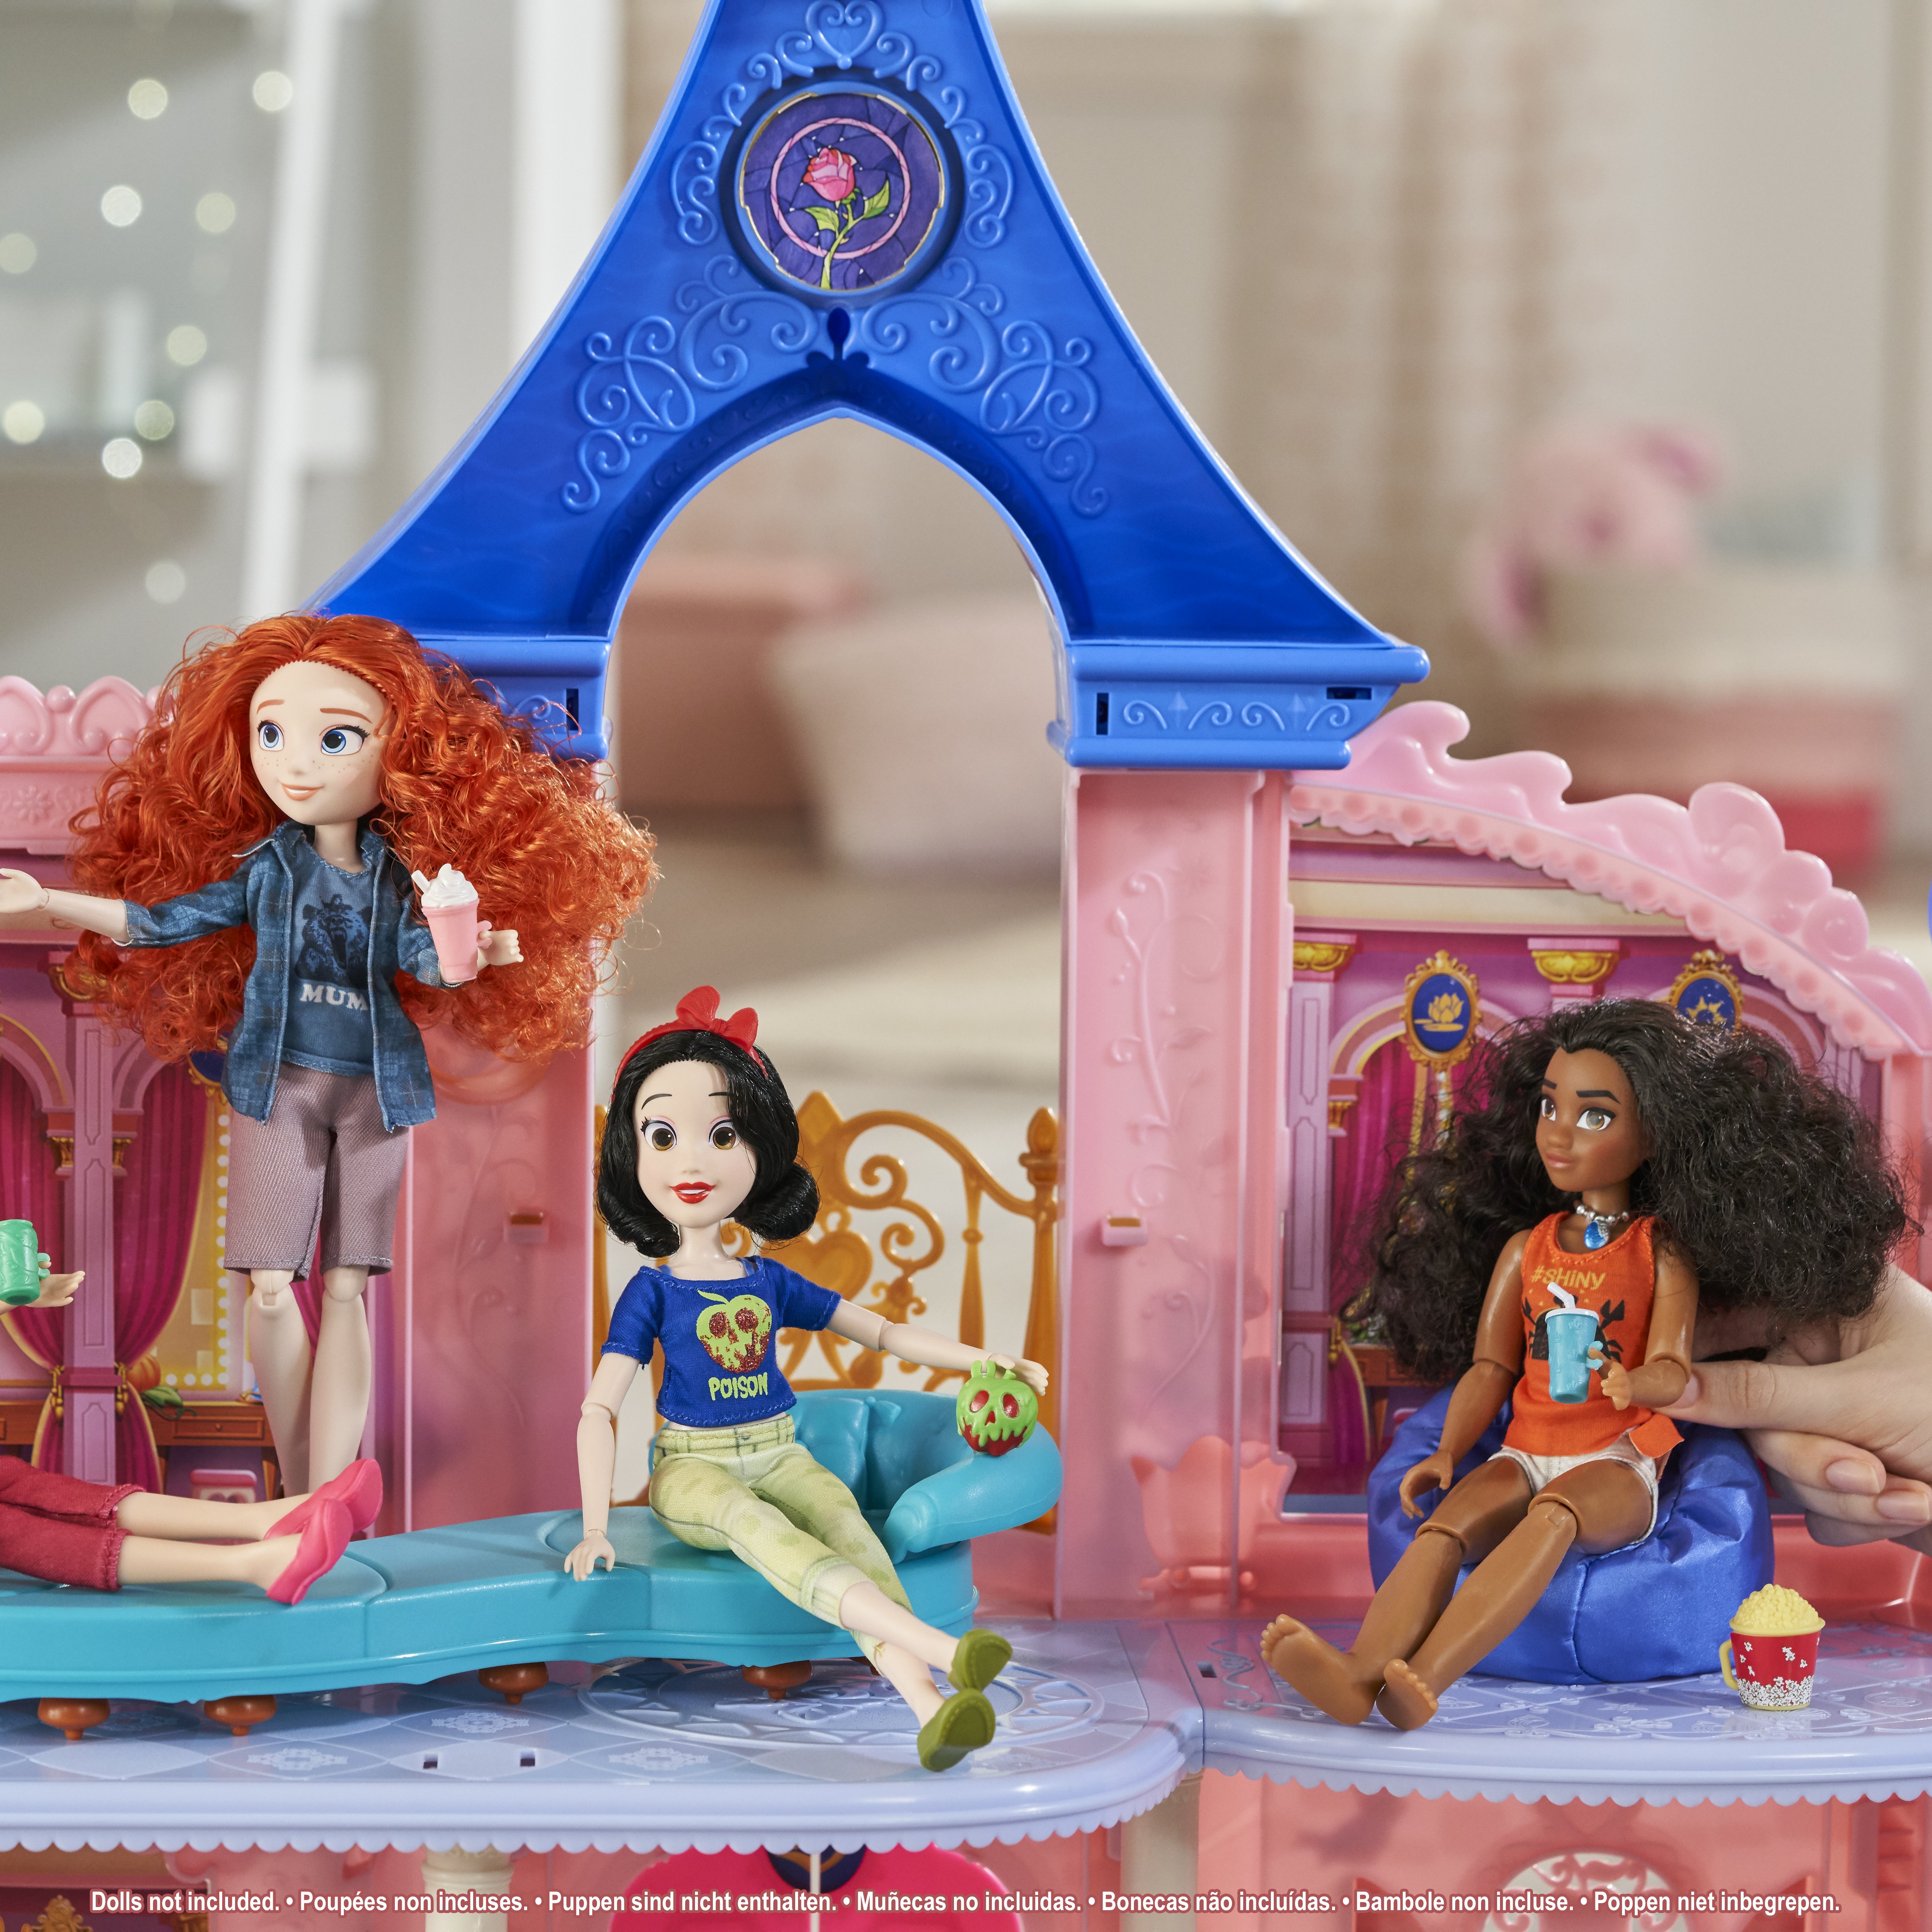 disney princess doll castle